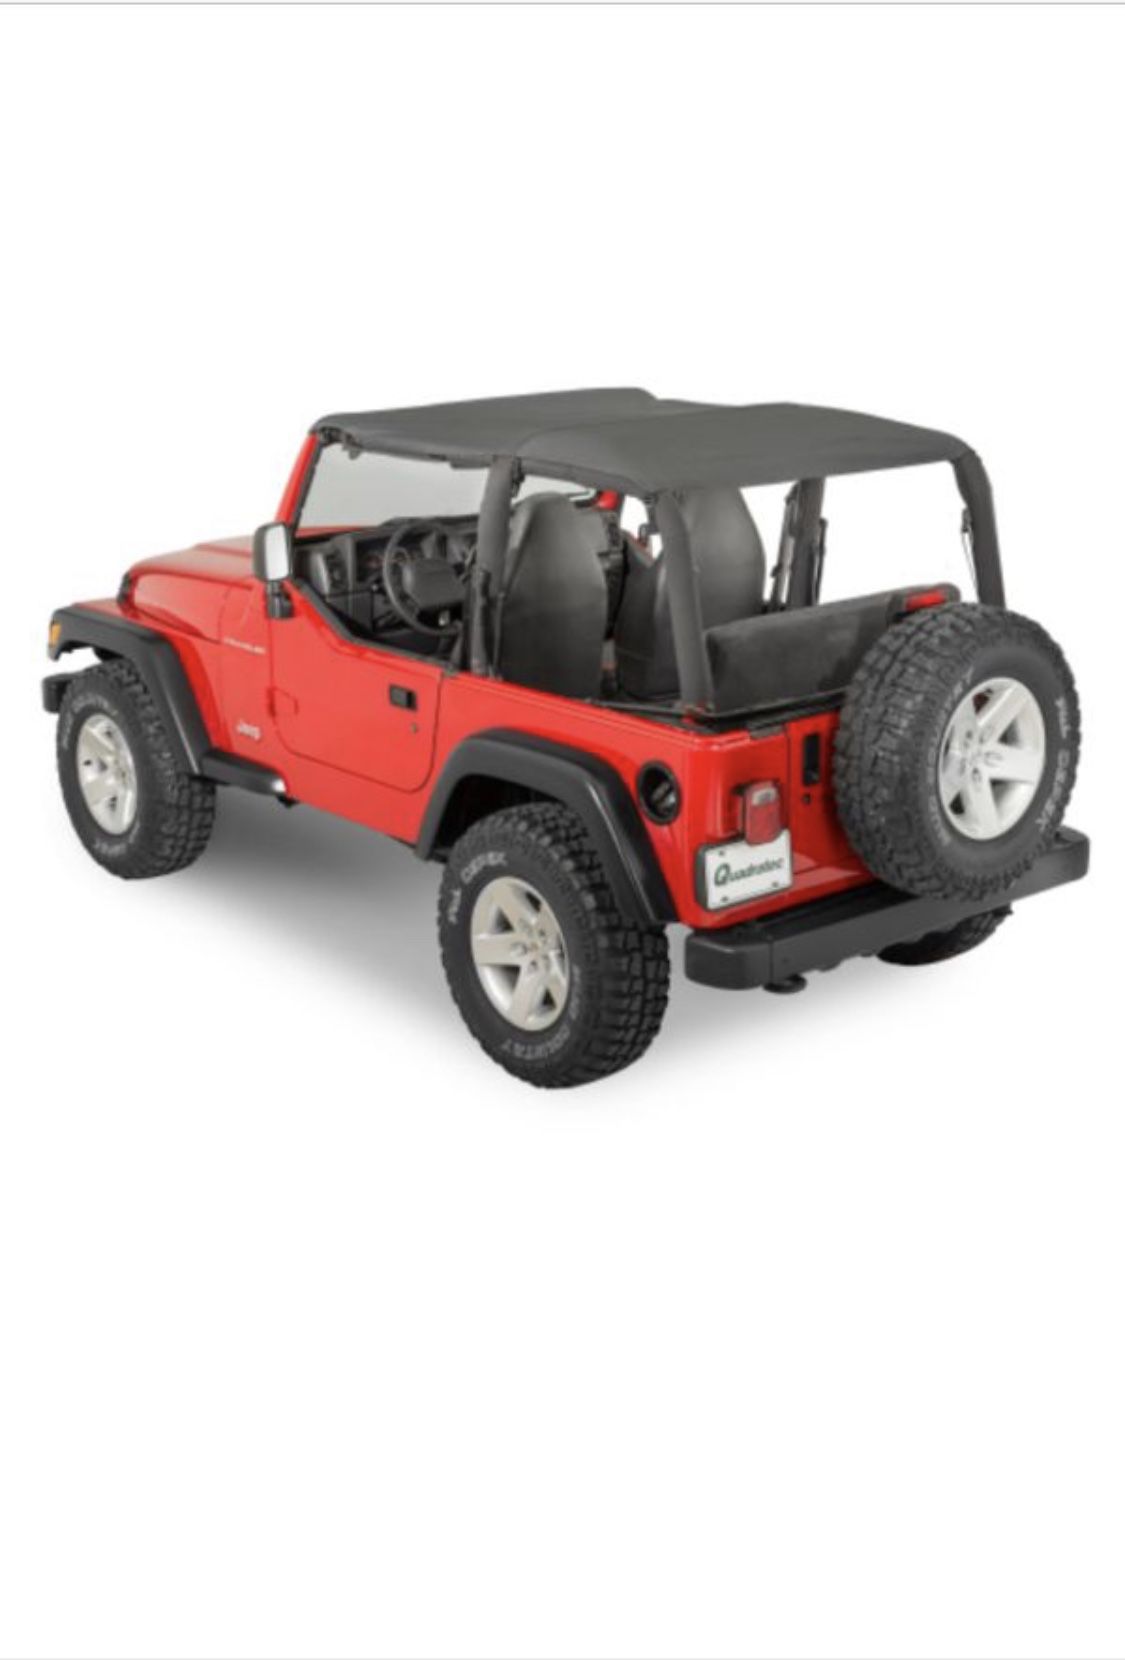 Jeep Wrangler for Sale in Escondido, CA - OfferUp